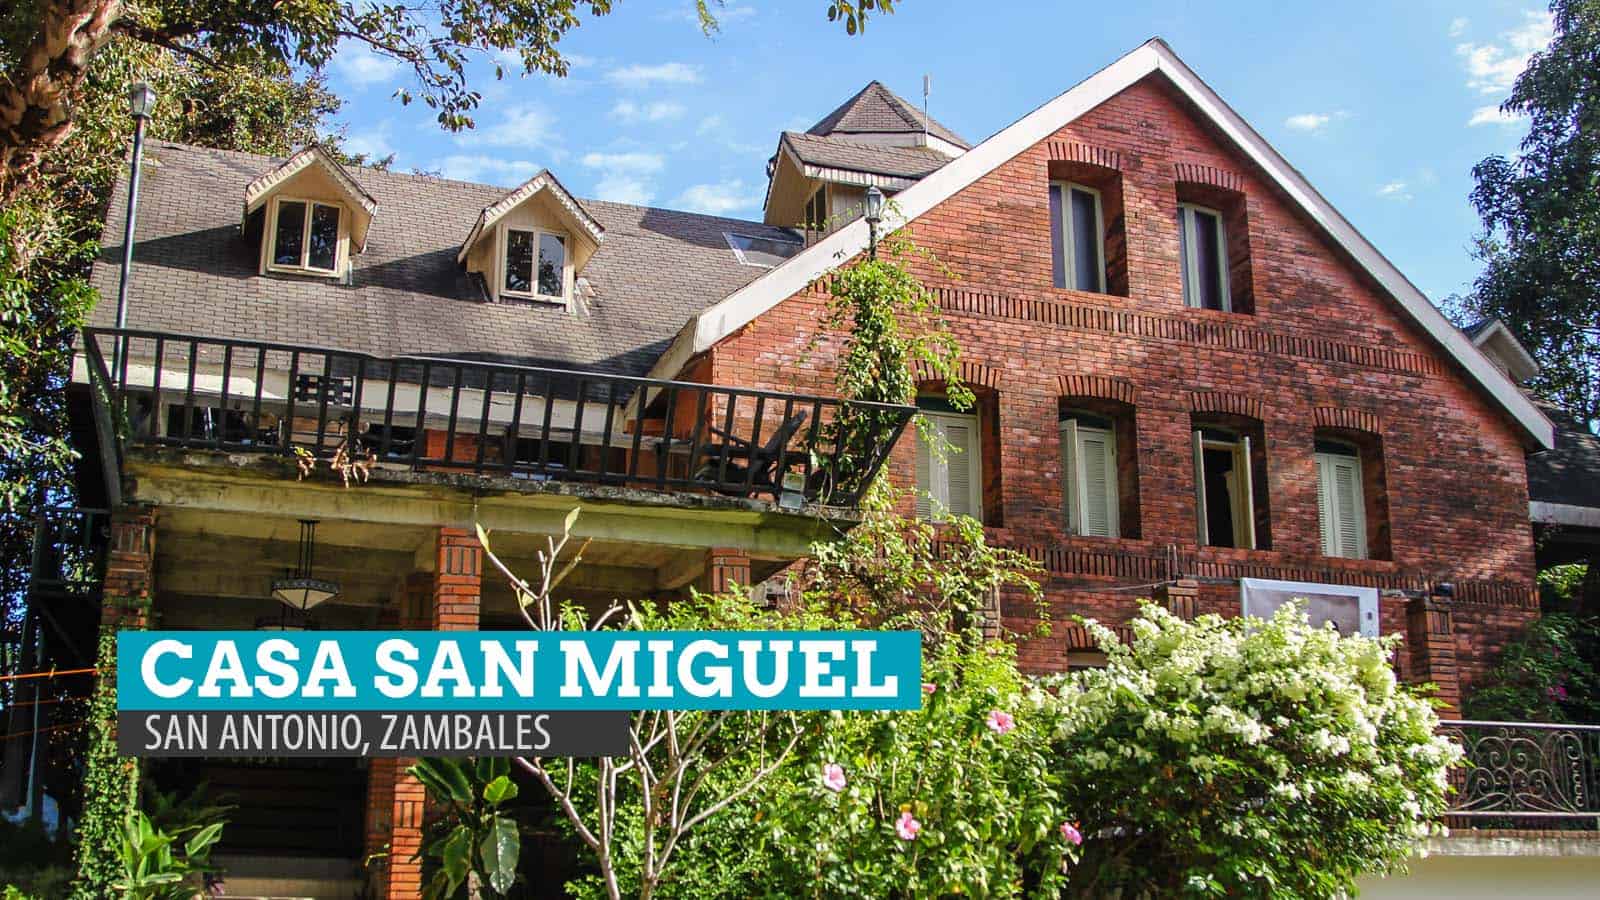 Casa San Miguel: Museum of Community Heritage in San Antonio, Zambales